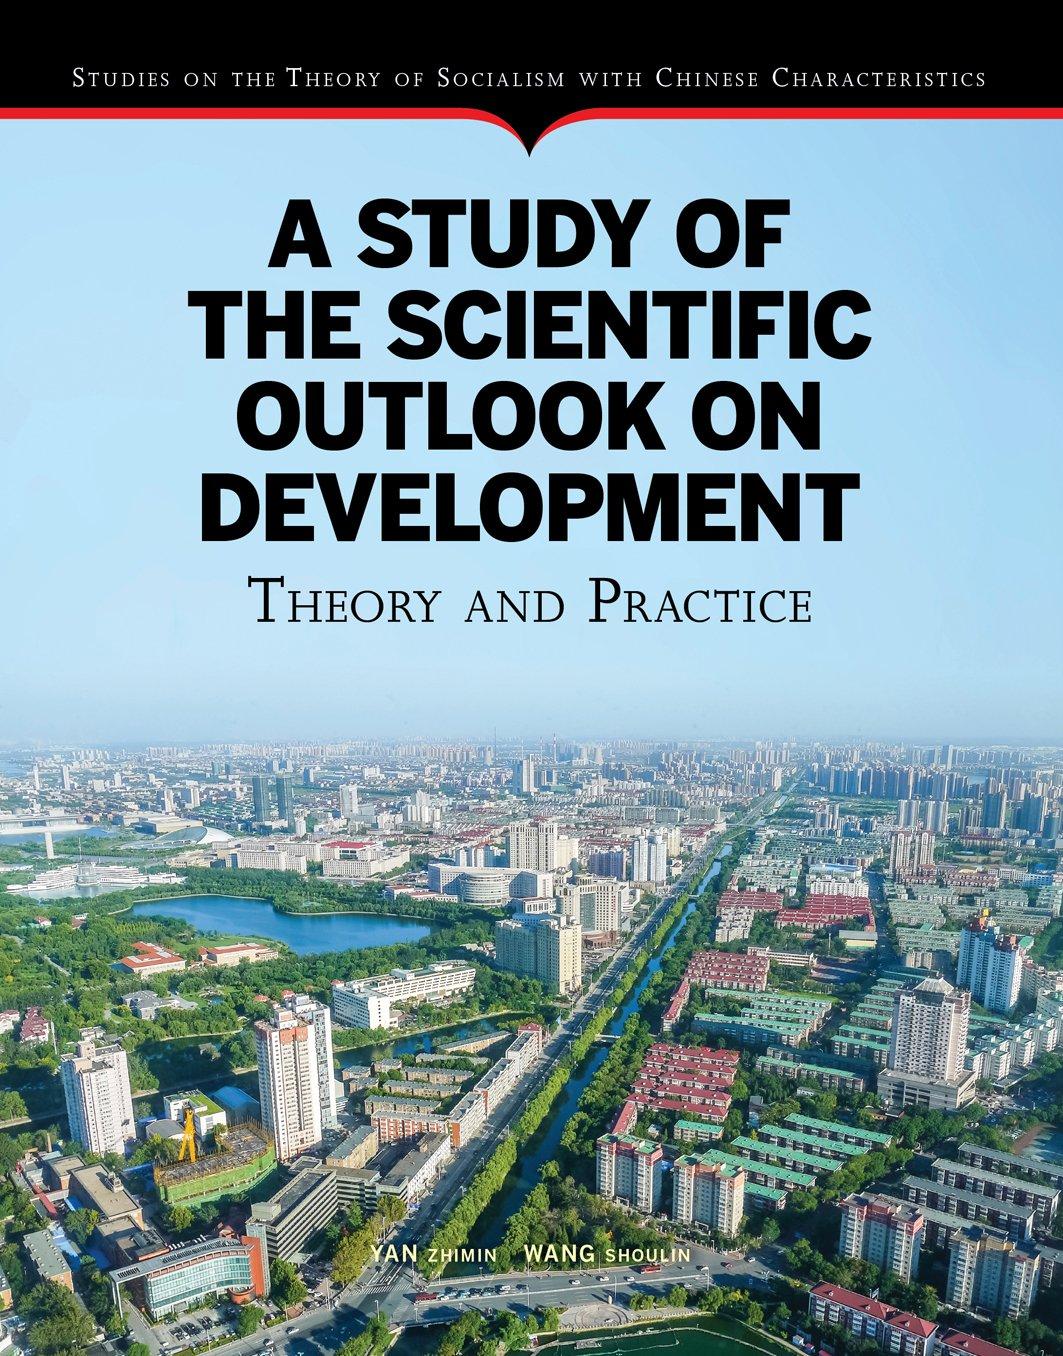 Scientific outlook on development